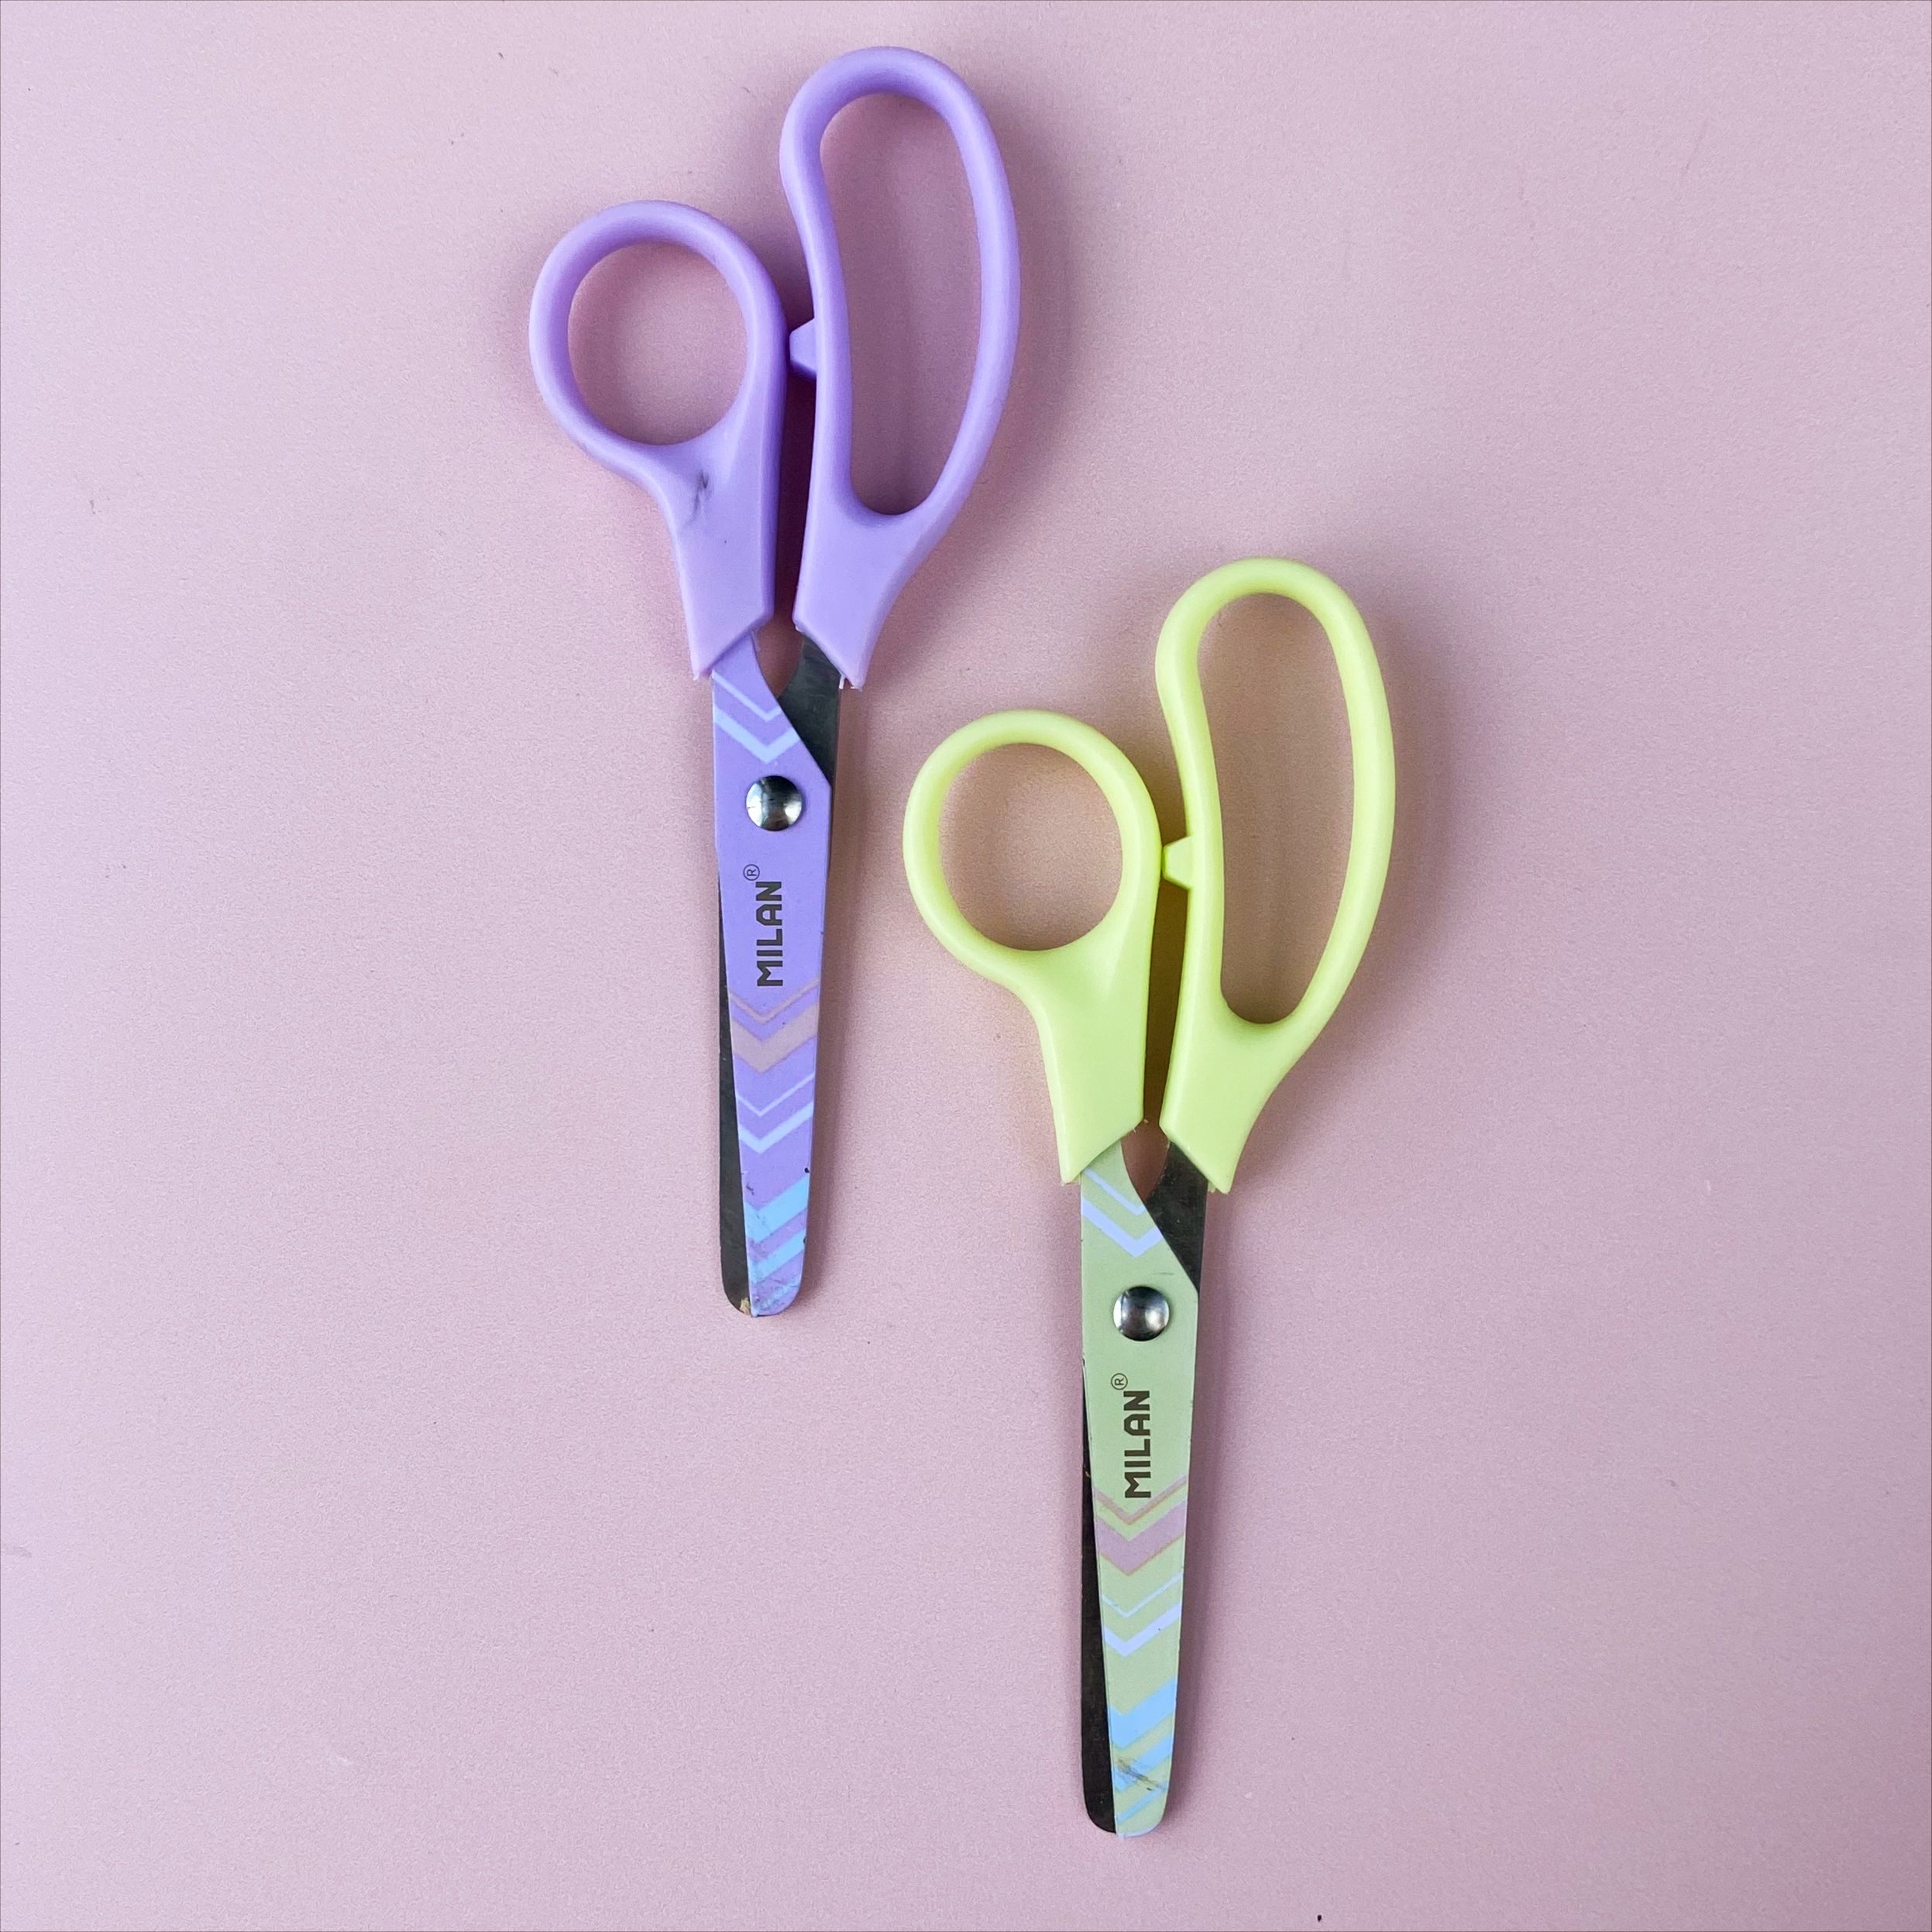 MILAN Blister Pack Basic Pastel Scissors Lilac Silver